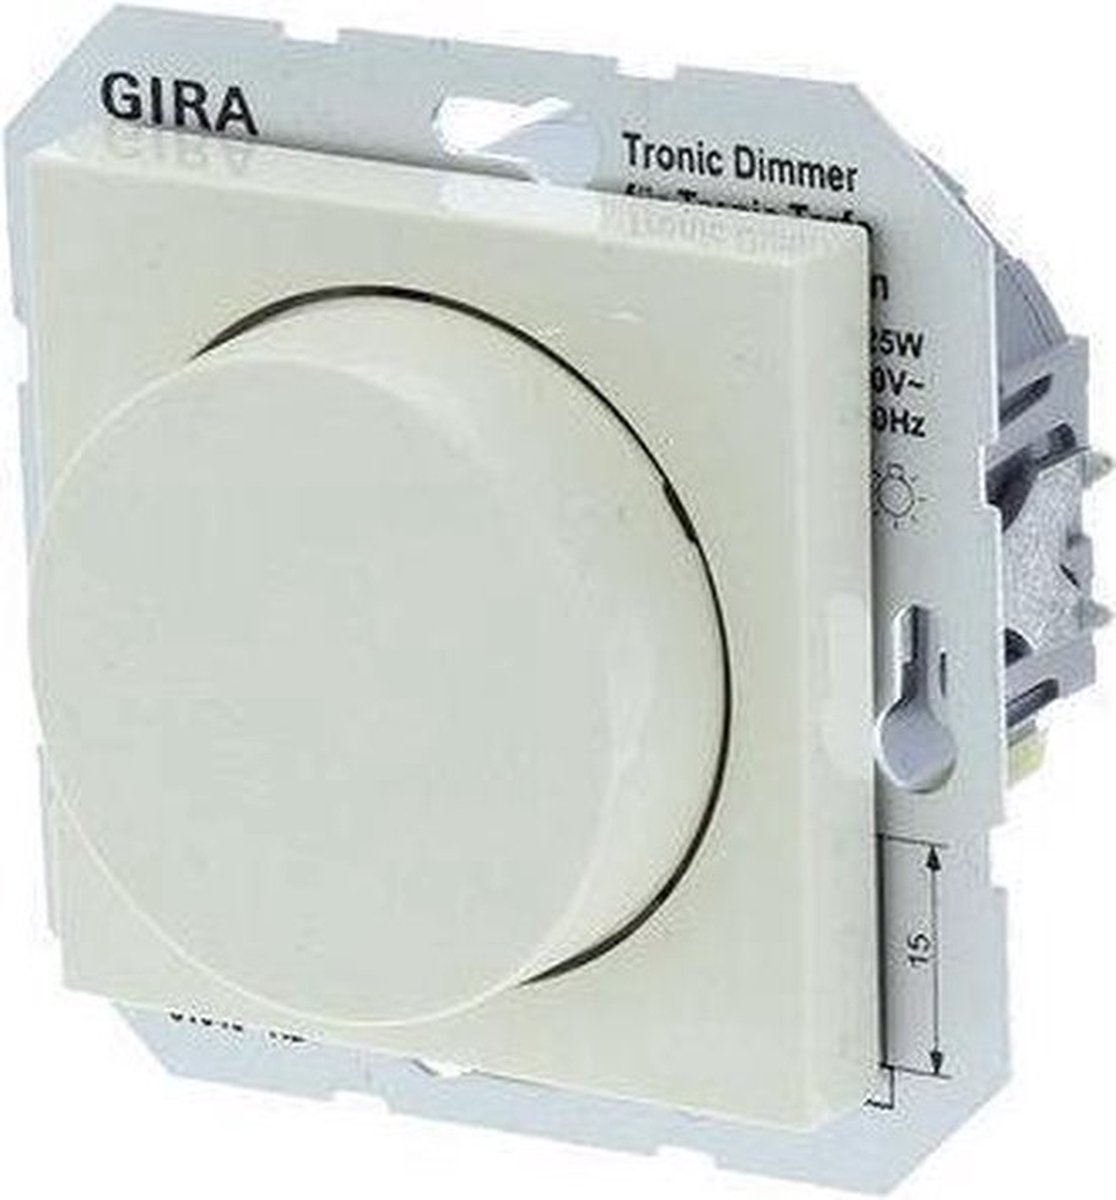 Gira SY55 Inbouw Dimmer - Tot 525W - Tronic - Drukwissel - Crème